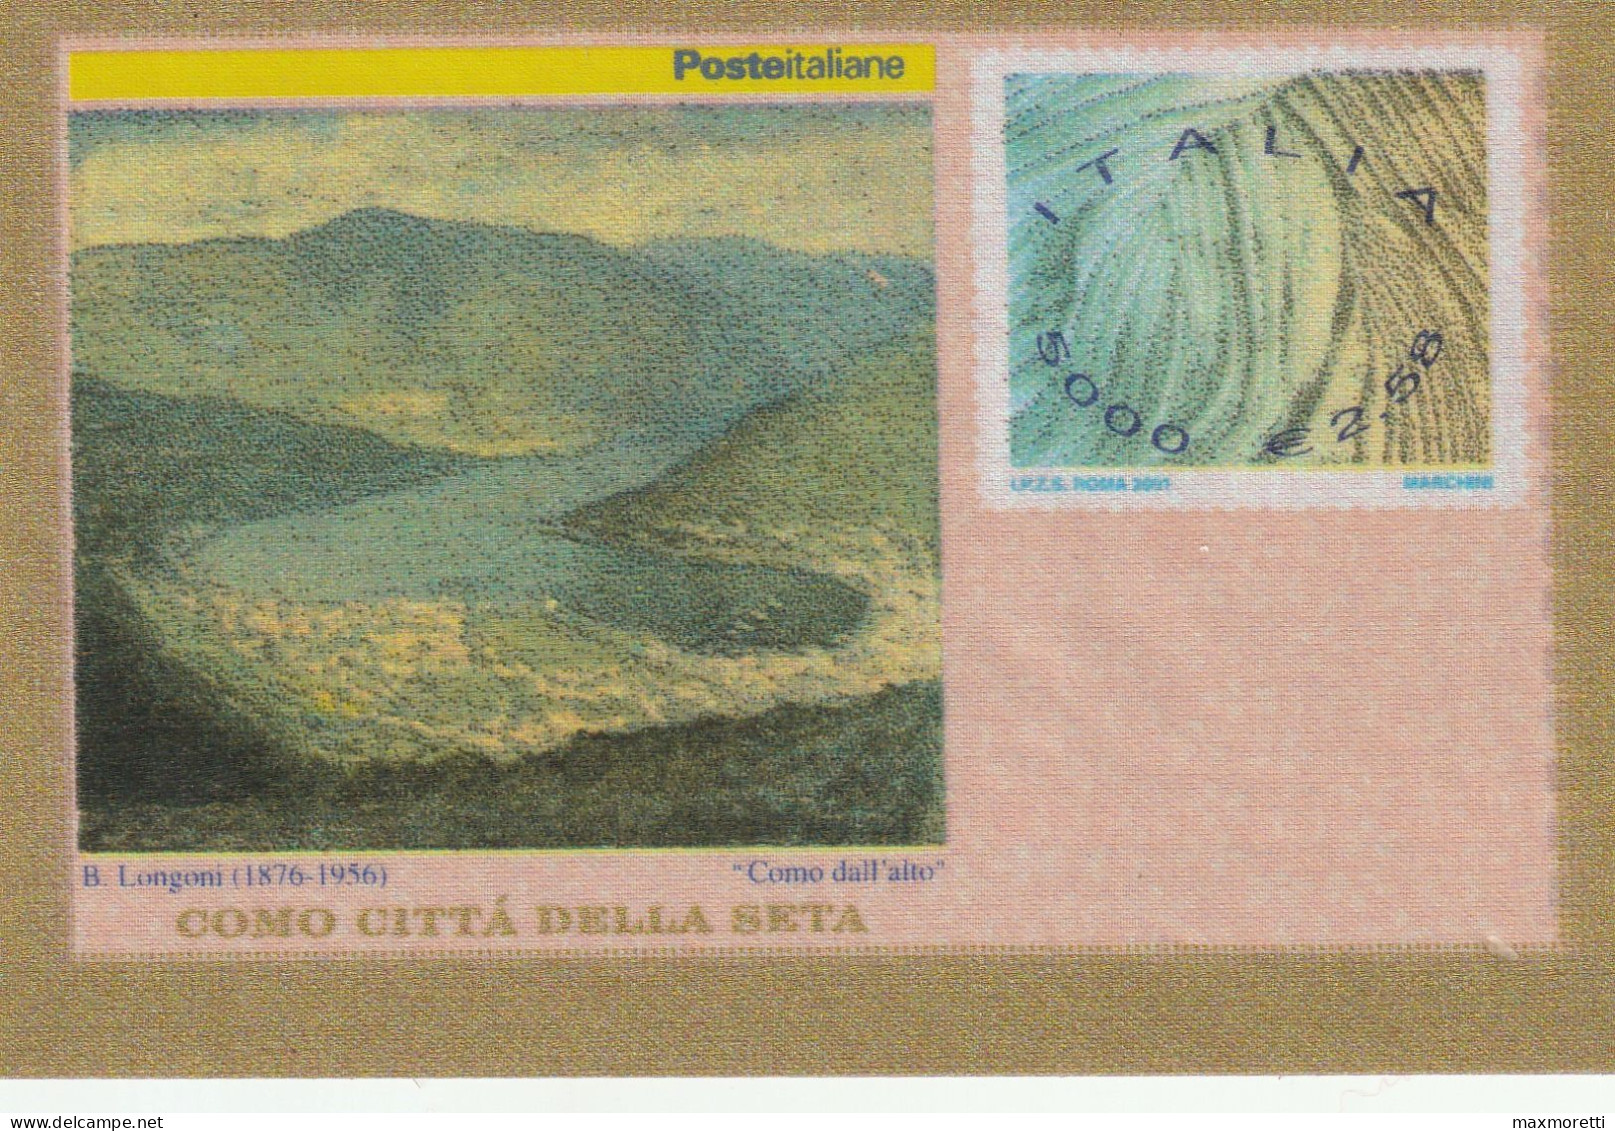 Francobollo In Seta Lire 5000 - 2001-10: Mint/hinged